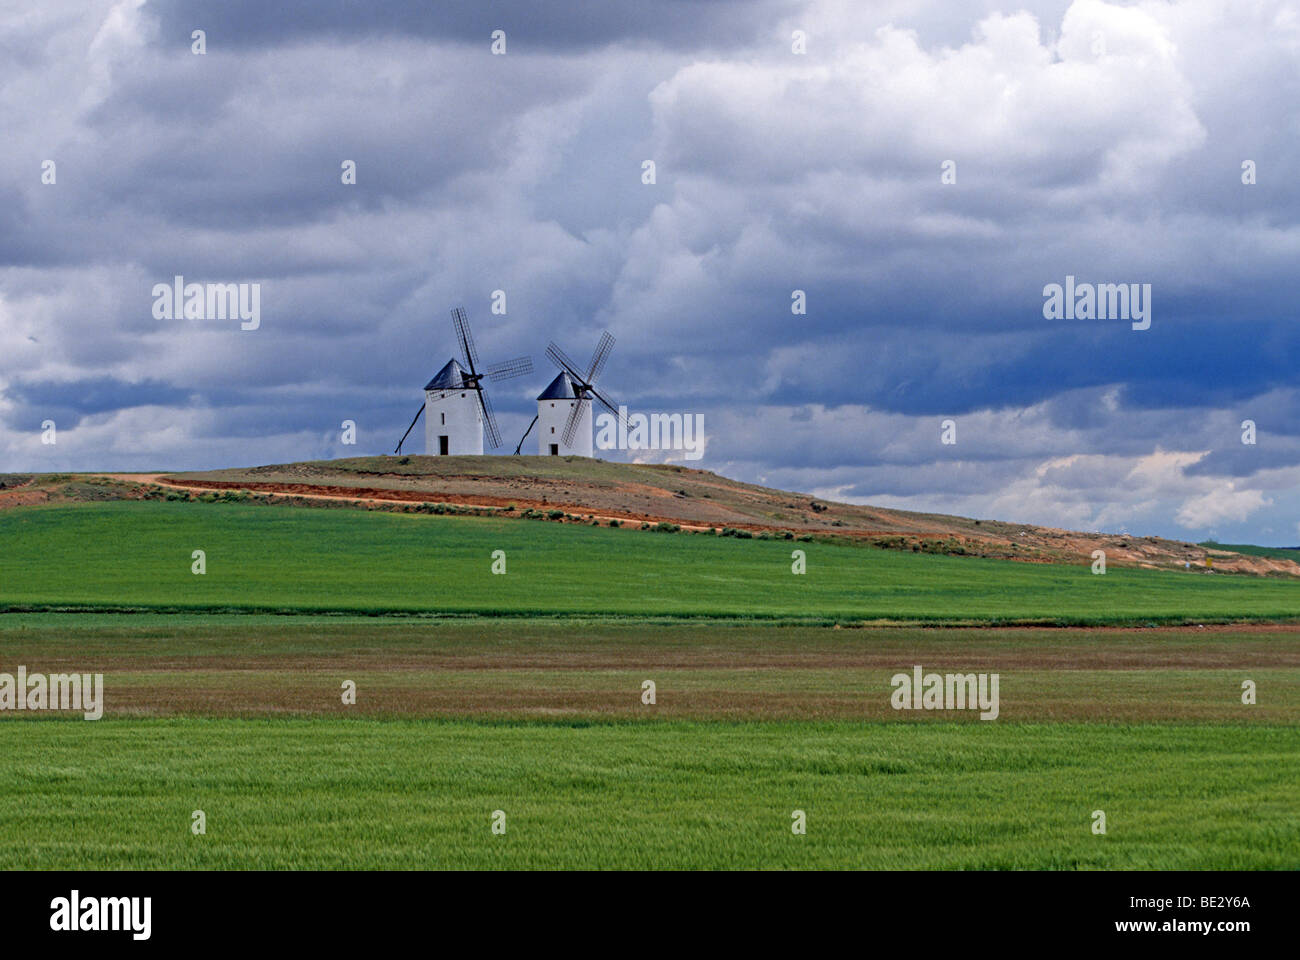 Farm fields and windmills, approaching storm, Trembleque, Castilla-La Mancha, Spain, Europe Stock Photo